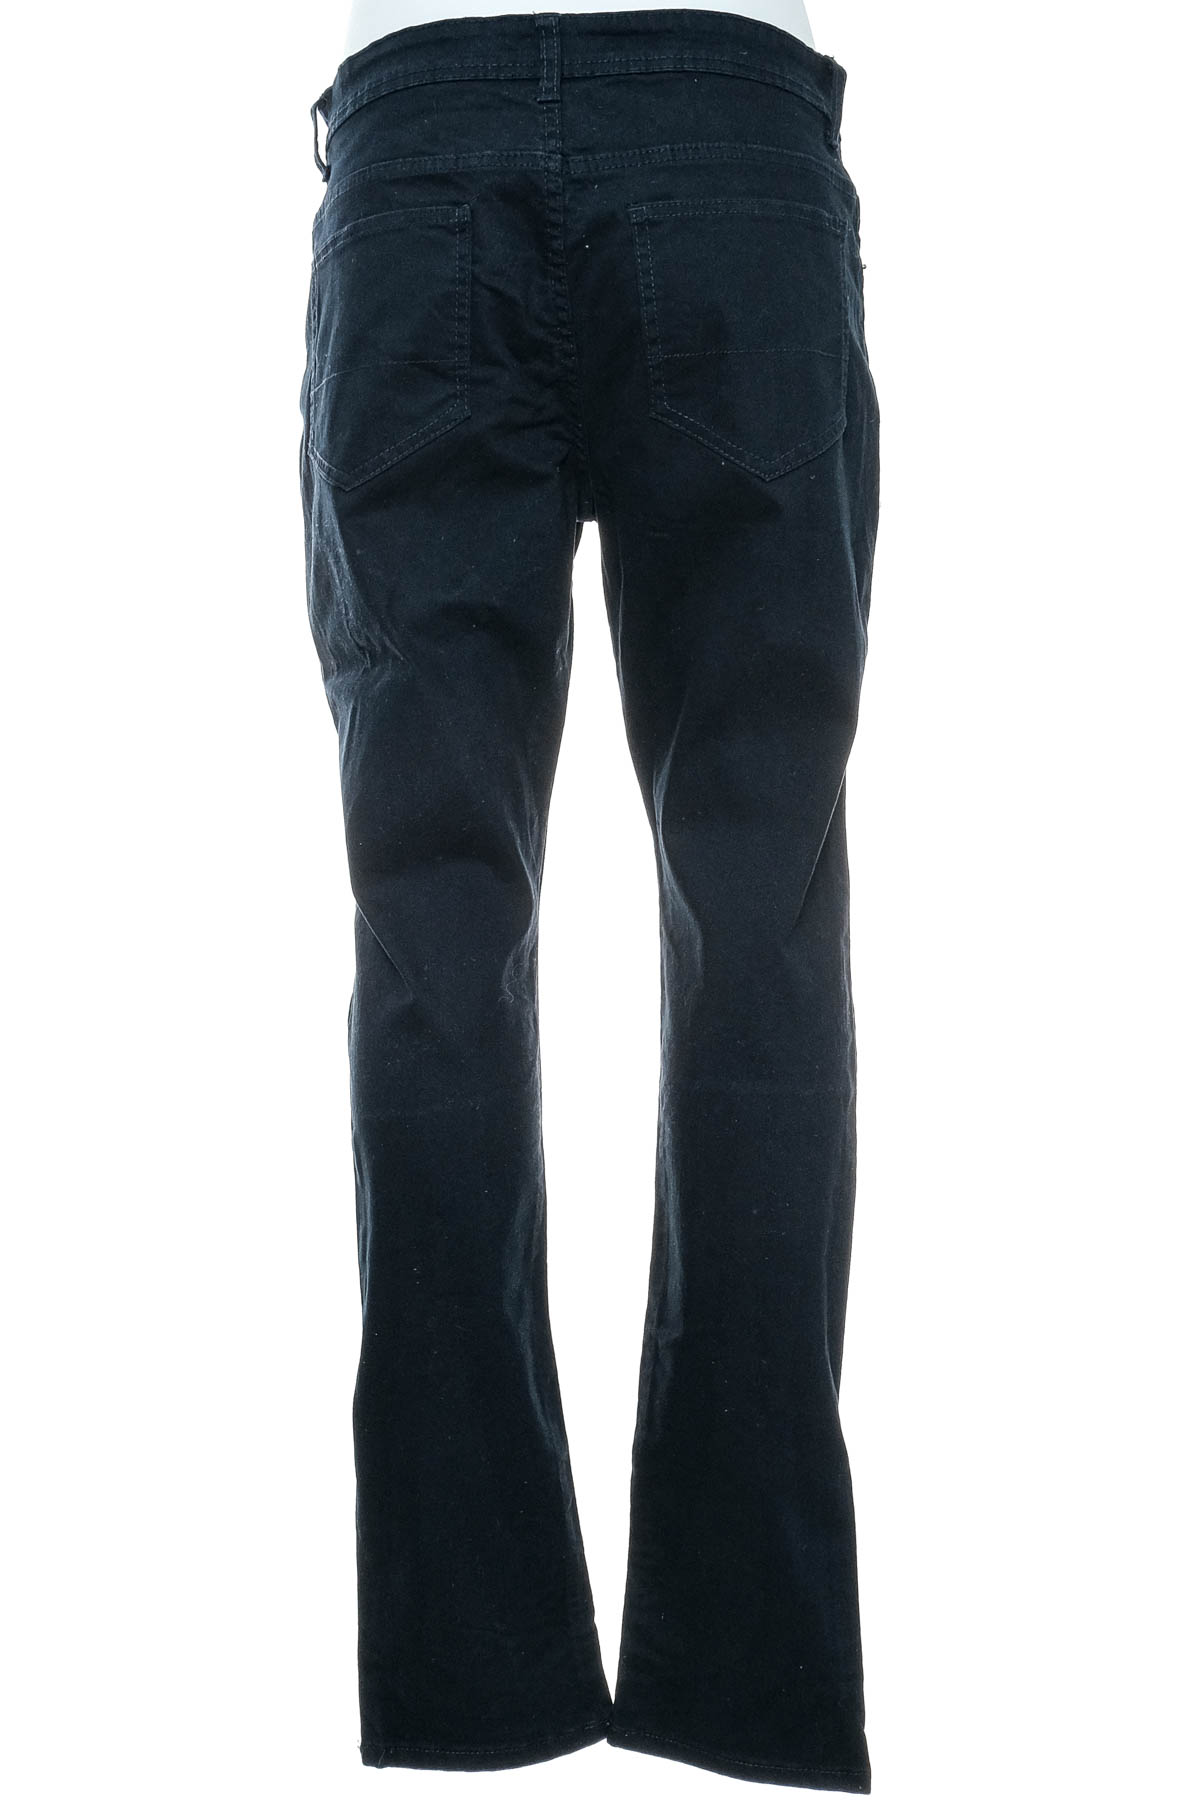 Men's jeans - Denim Co. - 1